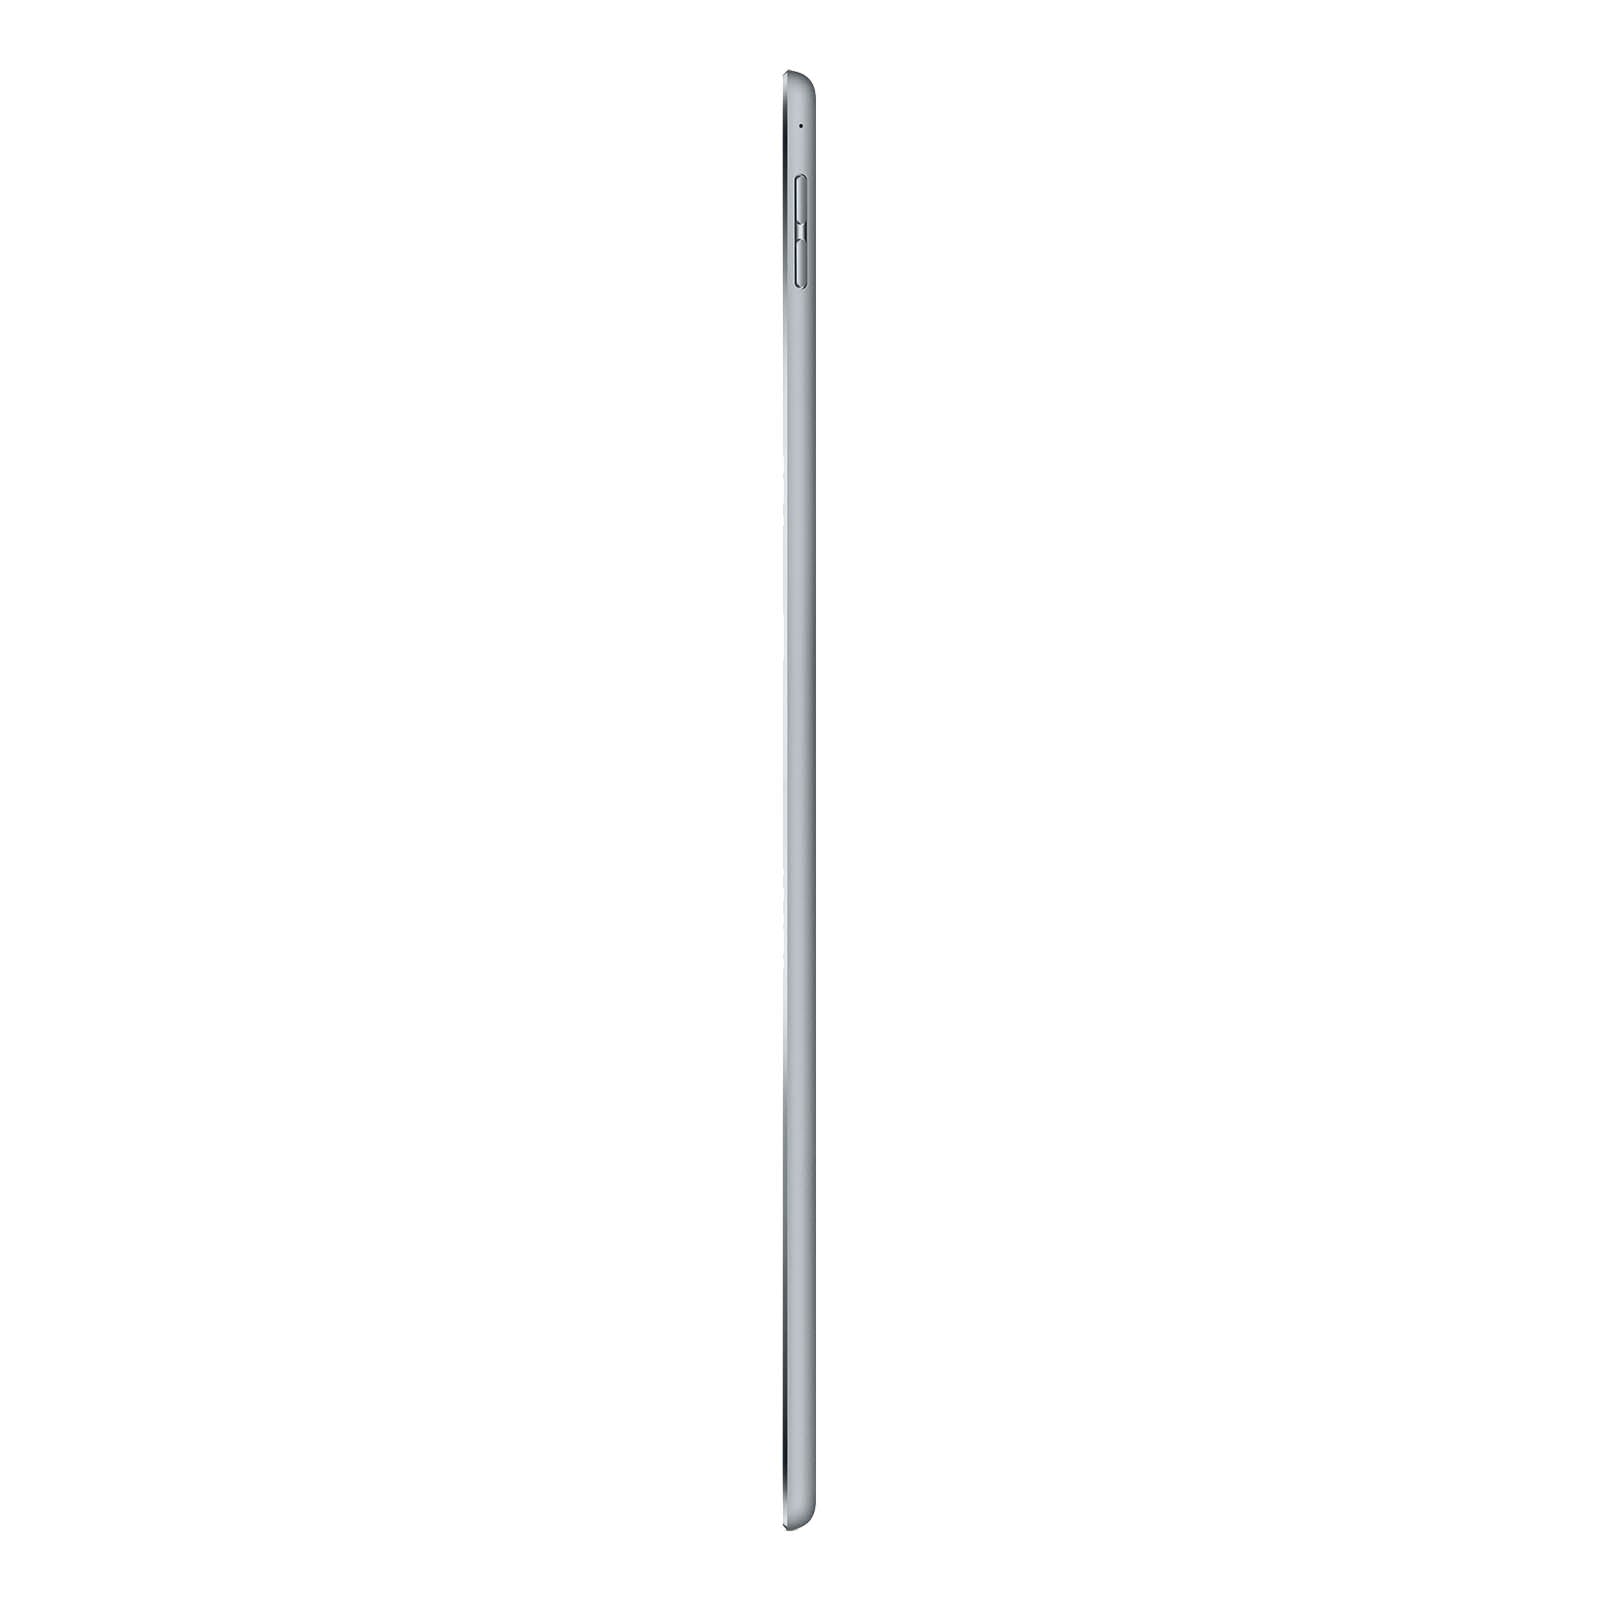 iPad Pro 12.9 Inch 3rd Gen 64GB Space Grey Good - Unlocked